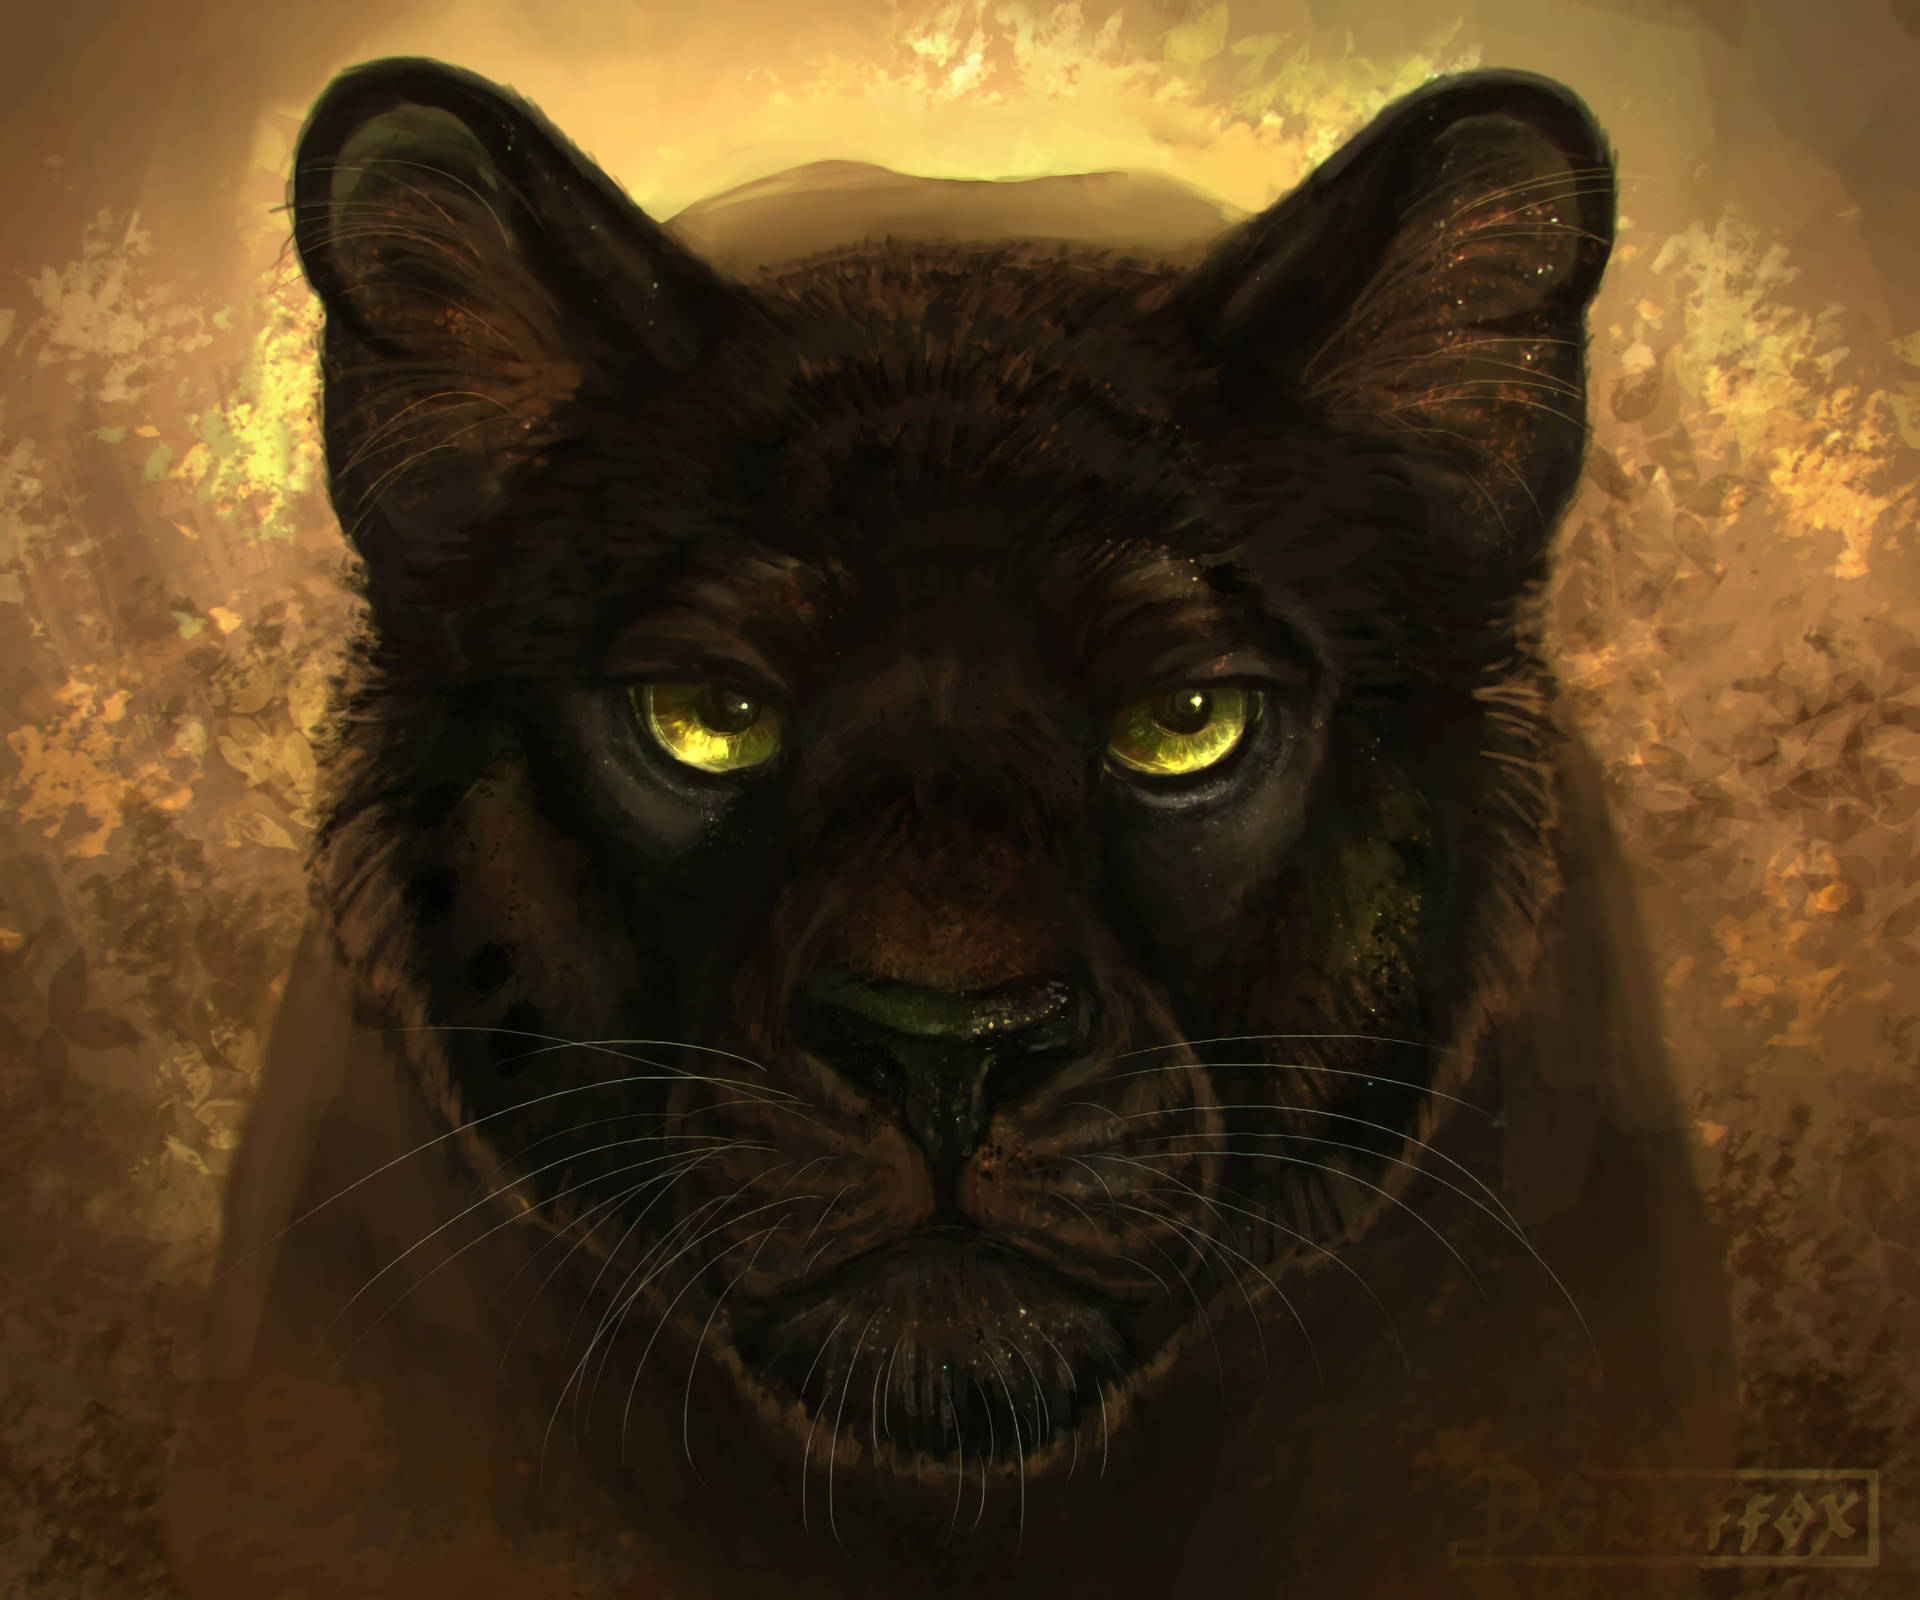 Top 999+ Black Panther Wallpaper Full HD, 4K✅Free to Use